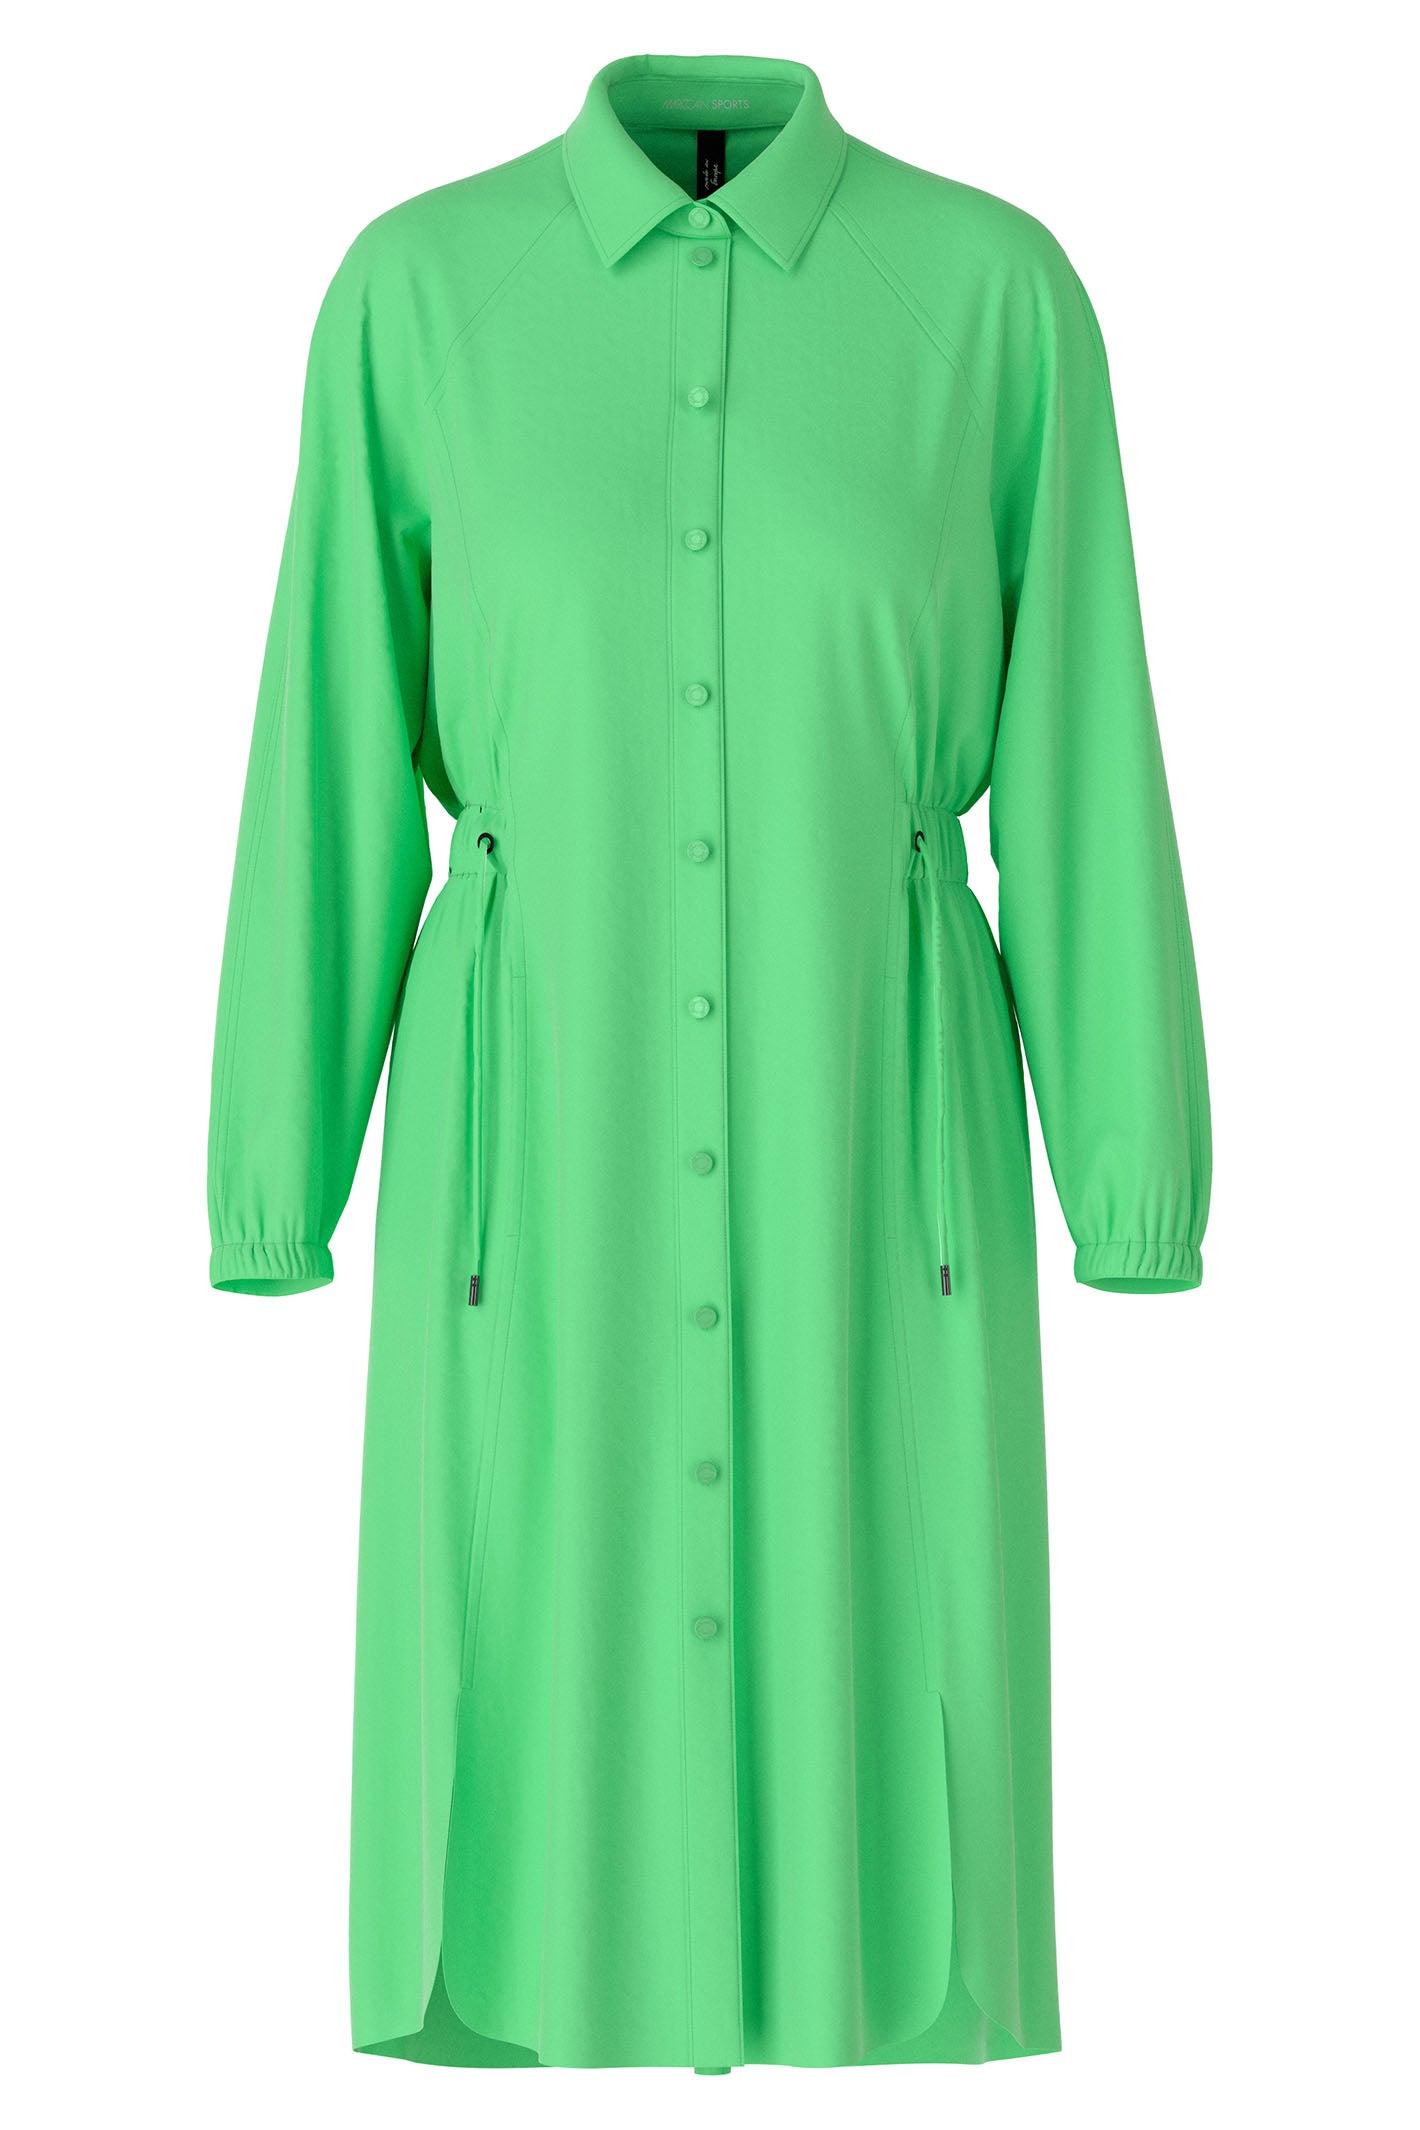 Marc Cain Sports WS 21.14 W28 543 New Neon Green Shirt Dress